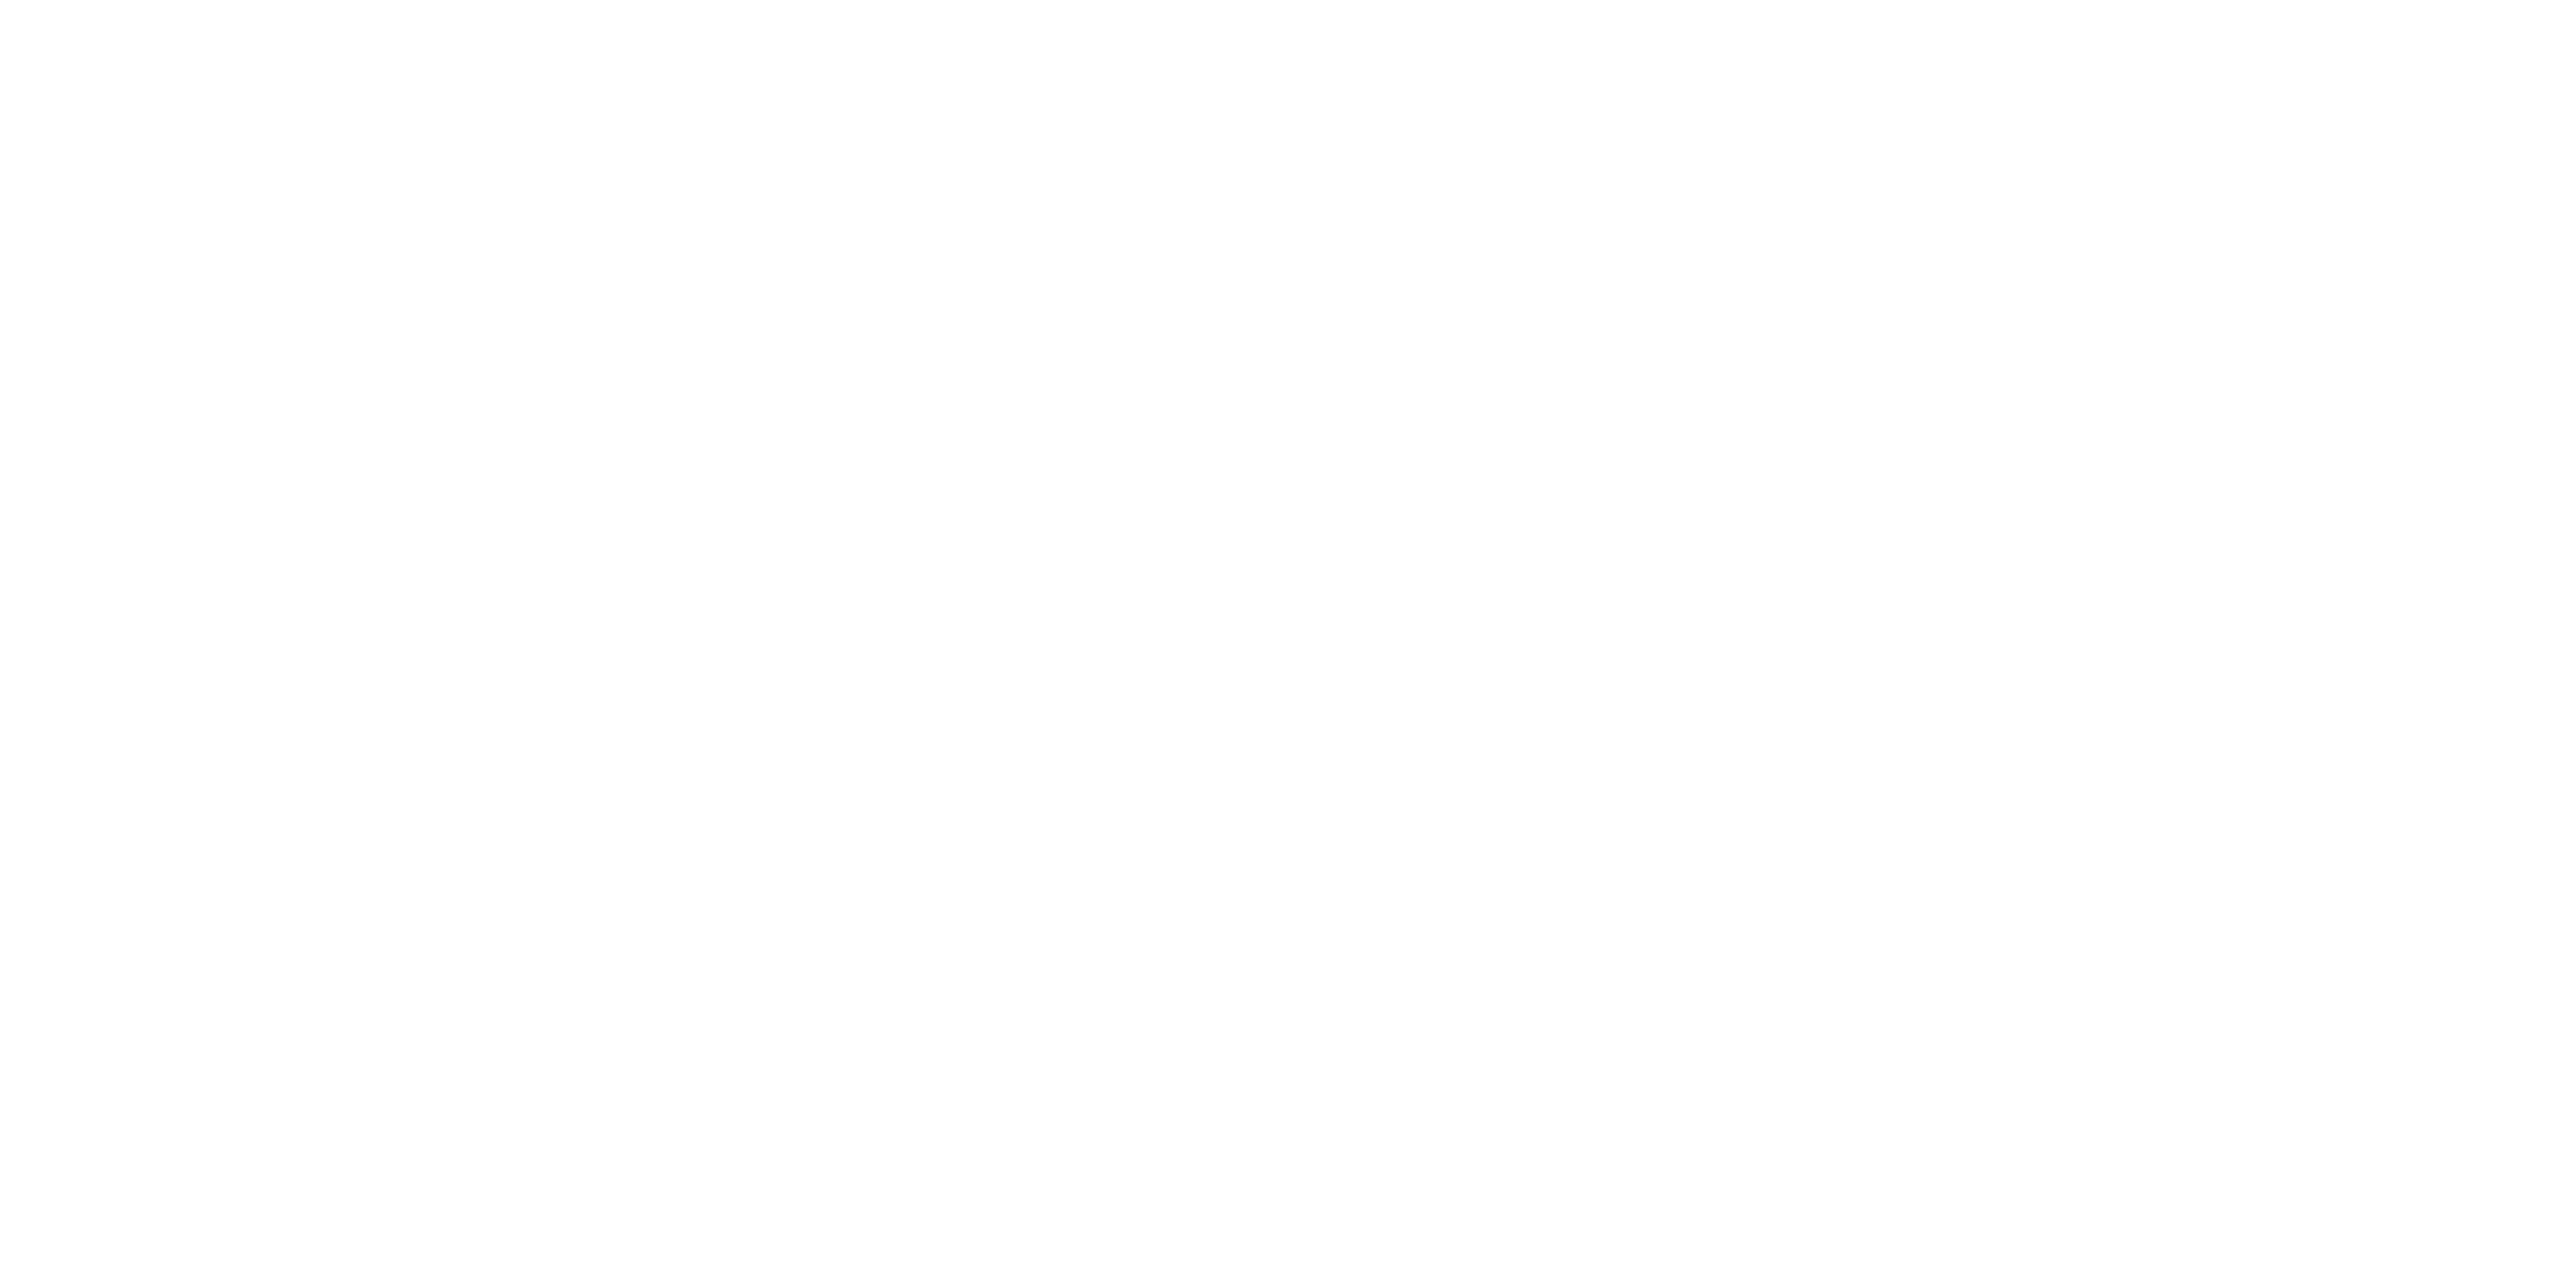 WAVY COMMUNITY